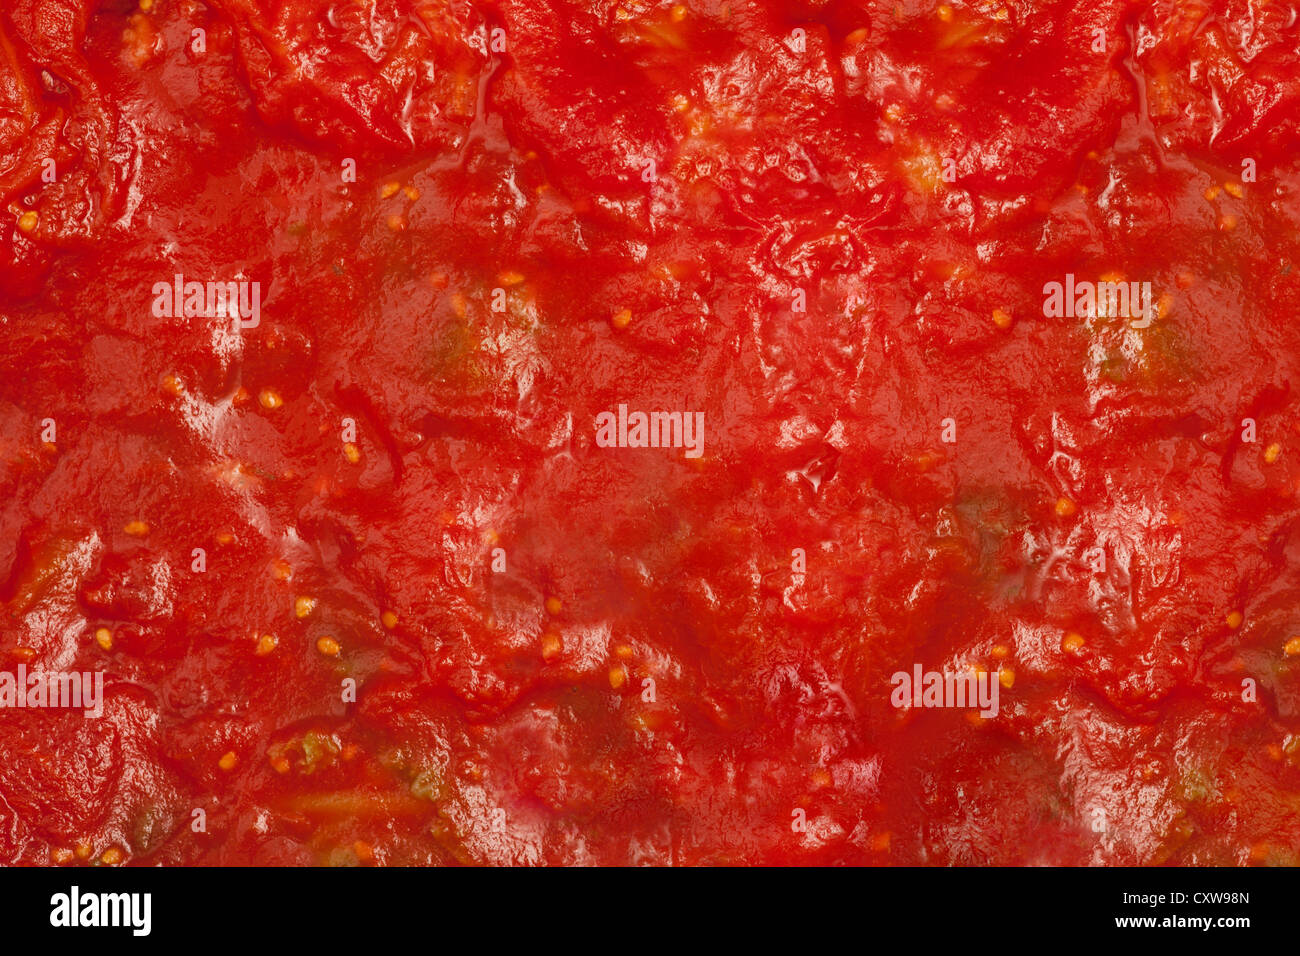 Salsa de tomate rojo, fondo de alimentos de textura rugosa Foto de stock